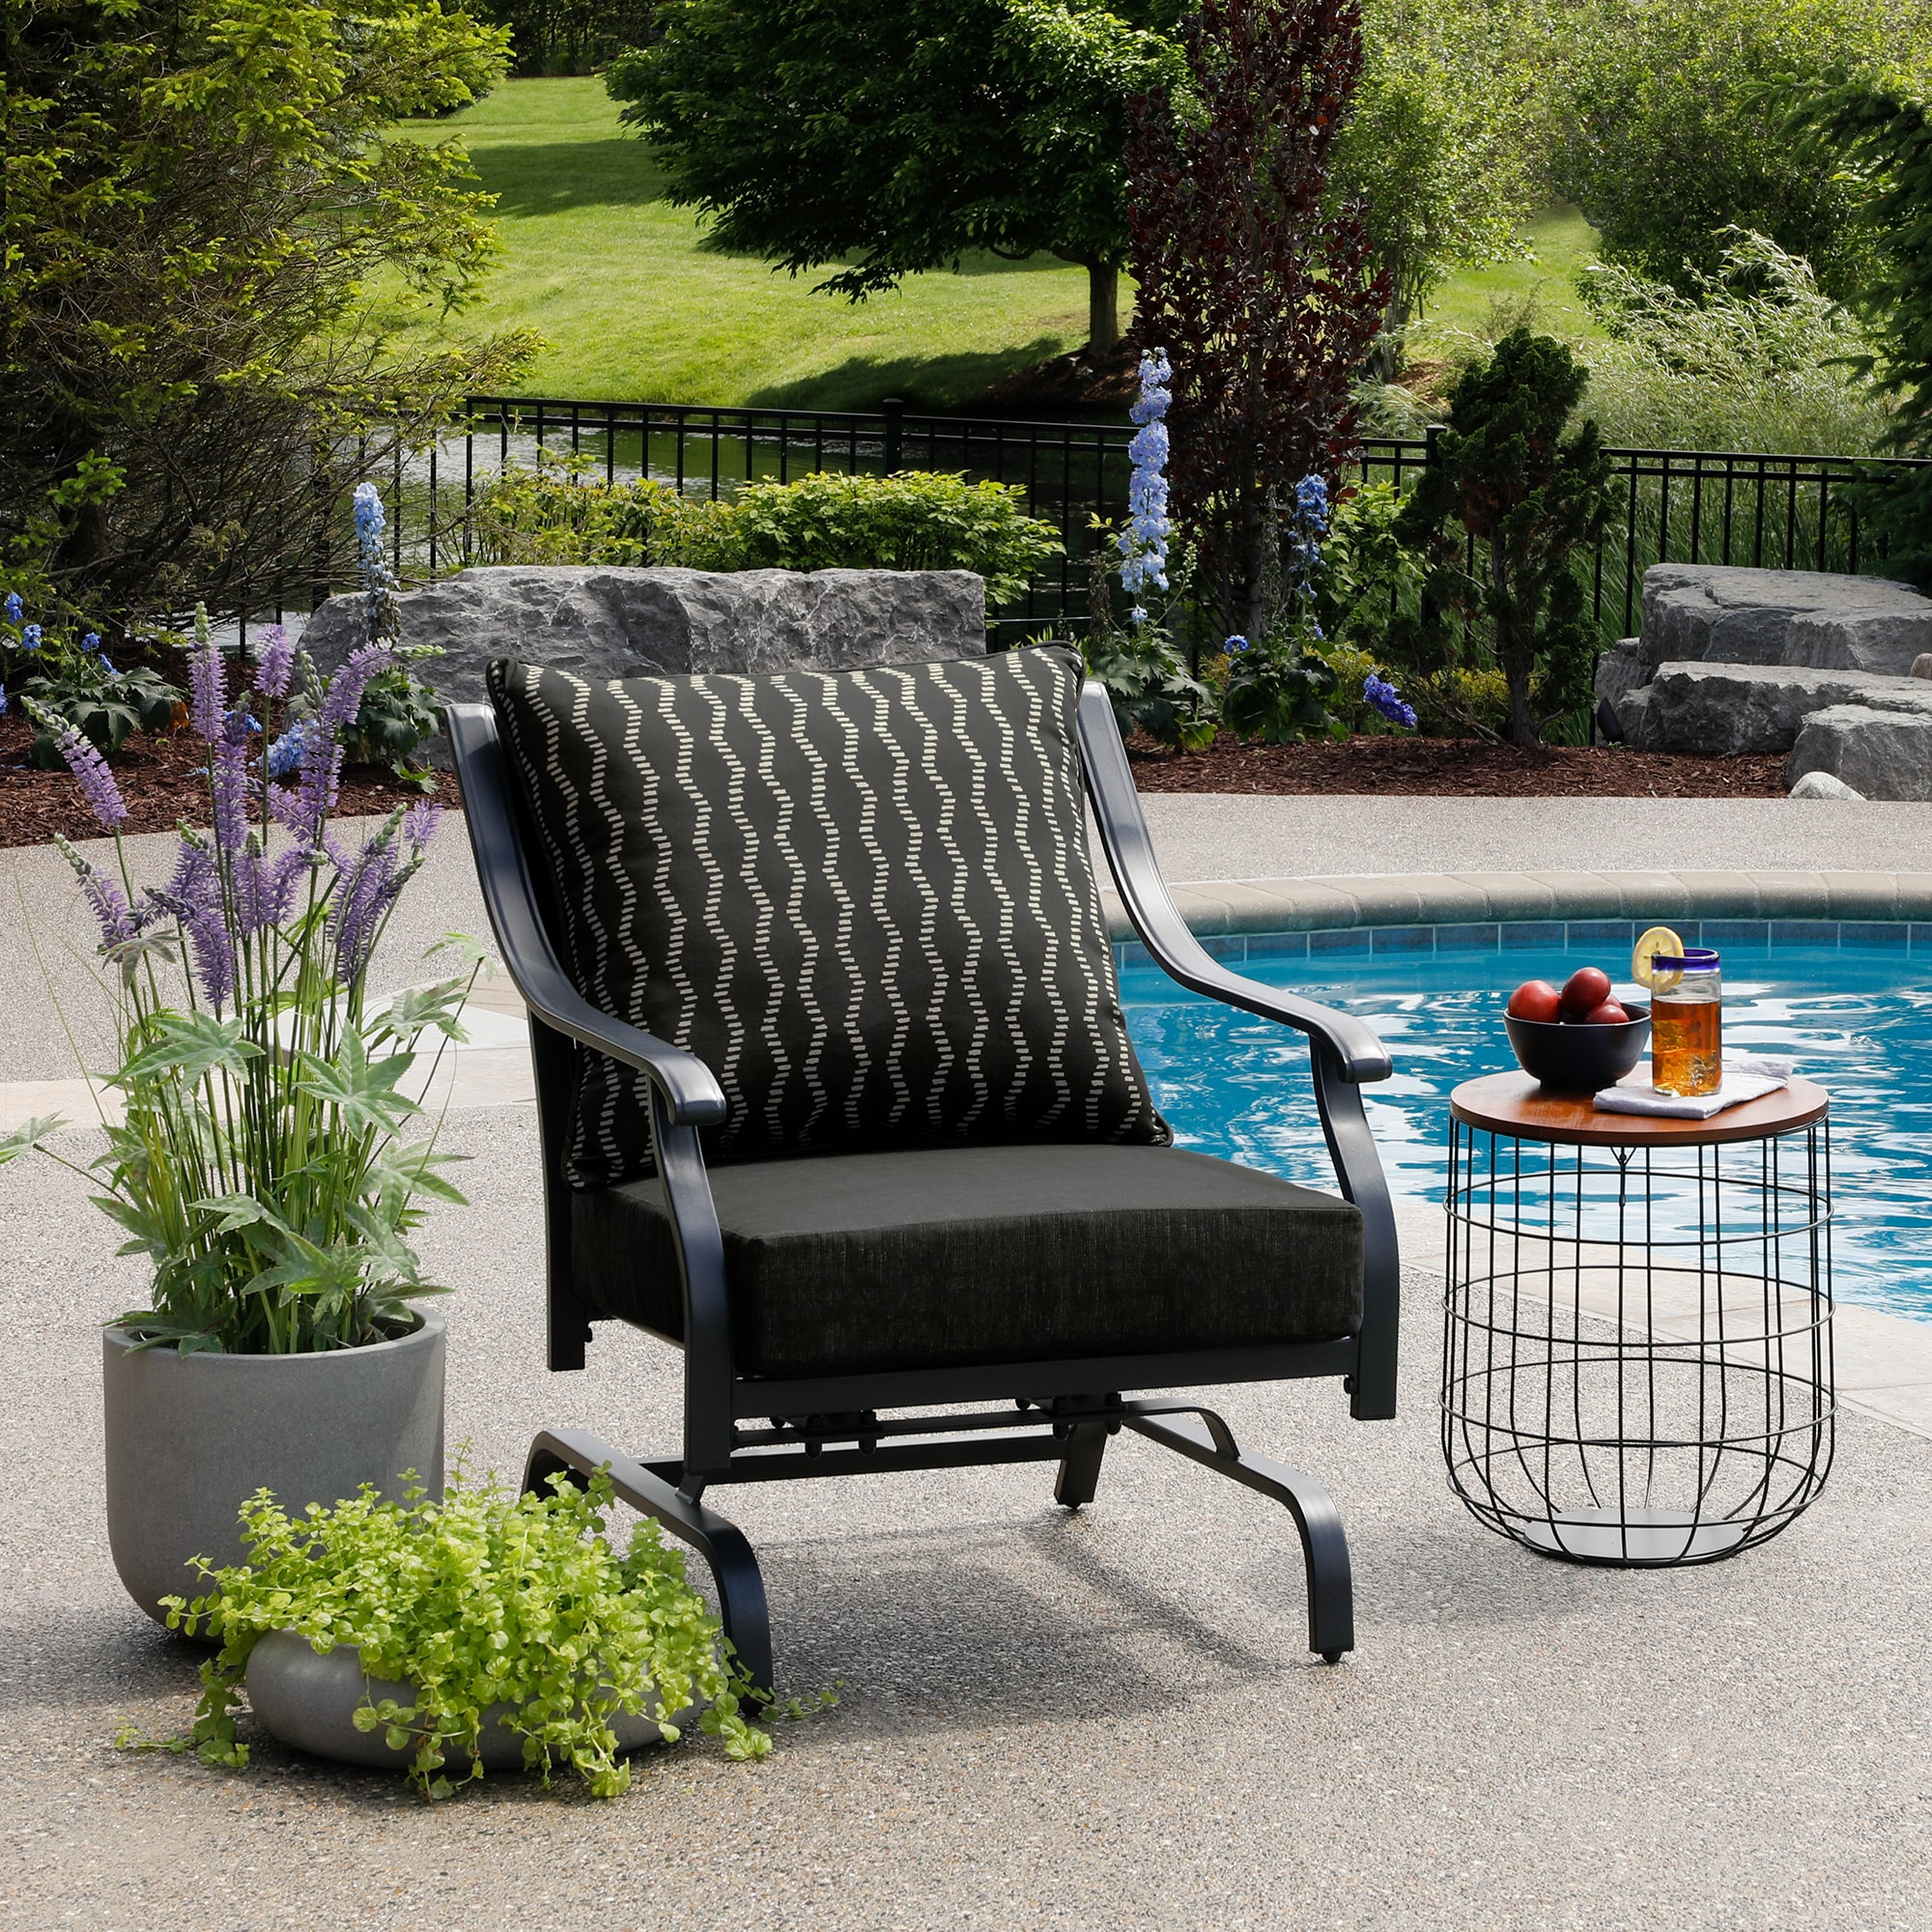 Premium Outdoor/Garden Weather-Resistant Fabric Bench Pad/Seat Cushion